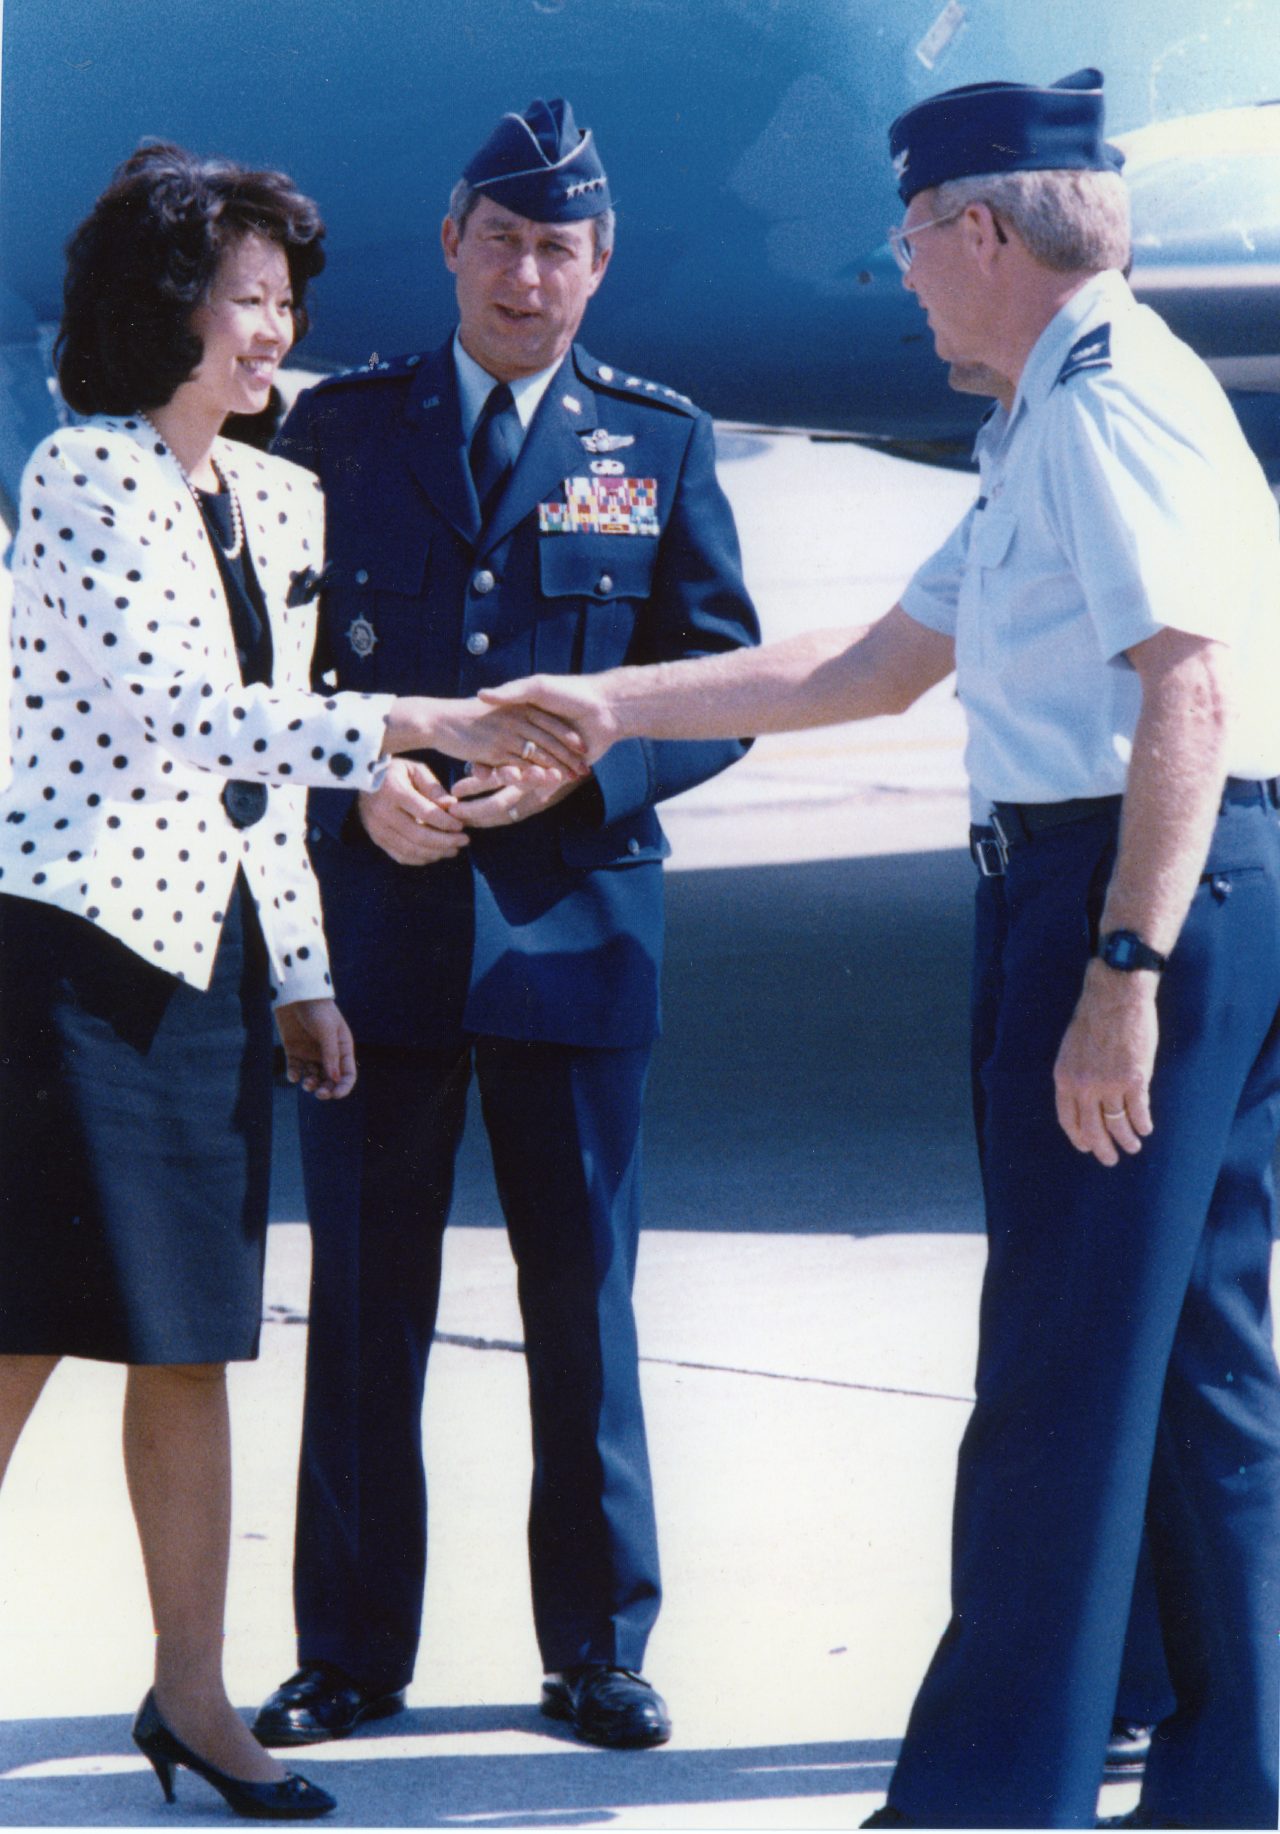 U.S. Deputy Secretary of Transportation Elaine Chao visiting headquarters of U.S. Transportation Command. Scott Air Force Base, Illinois.